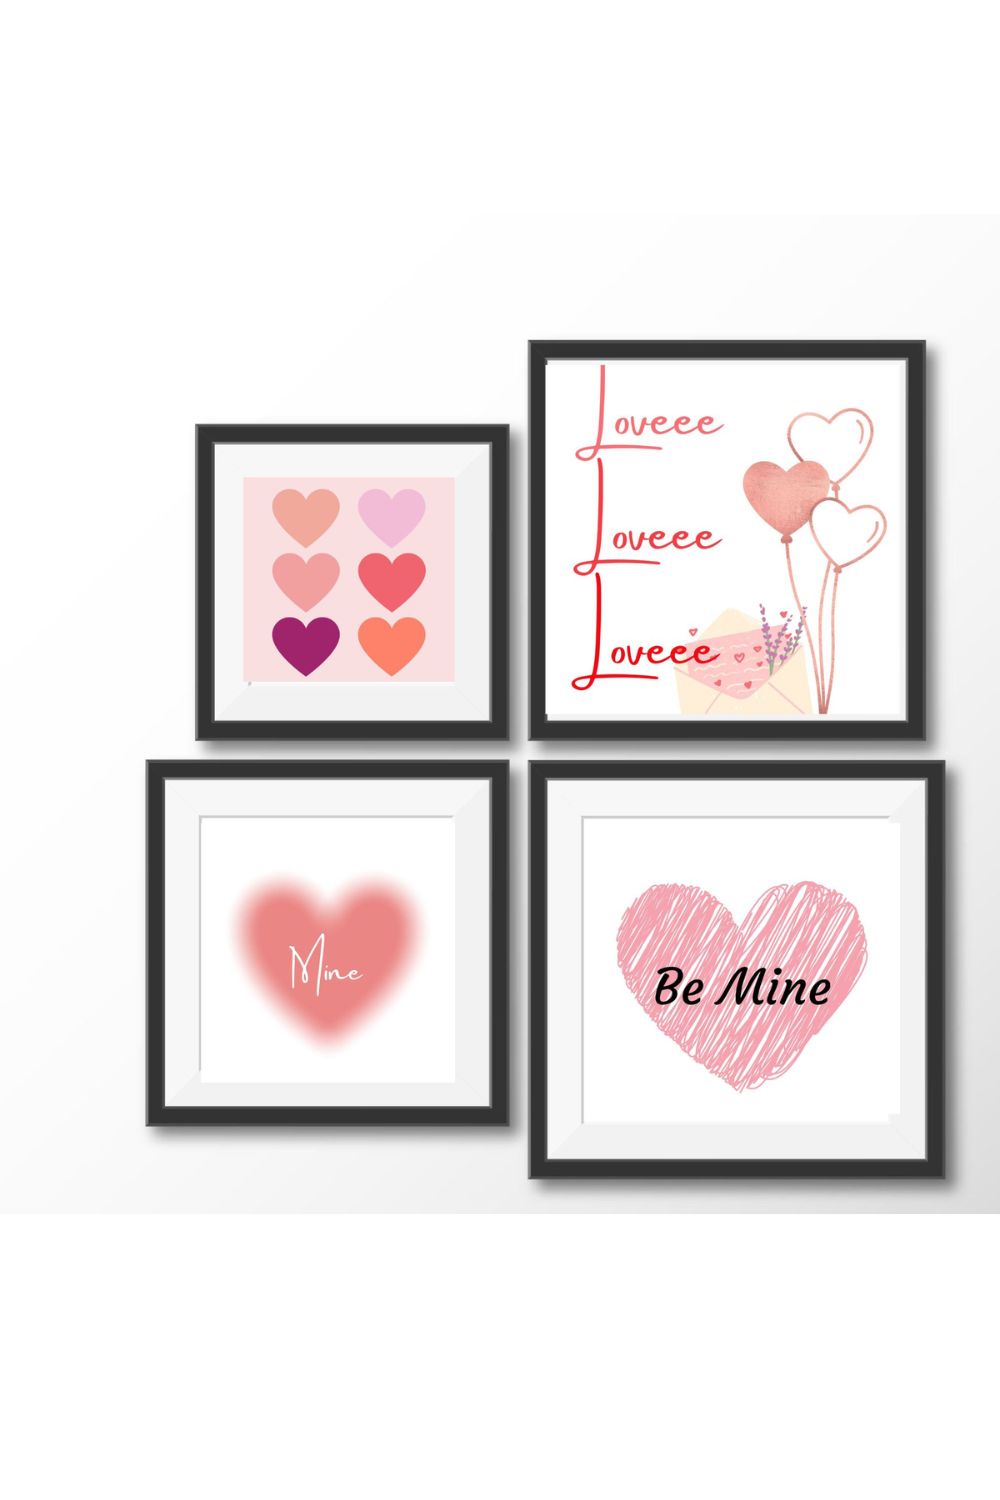 Minimalist Valentines Printable Gallery Wall Set of 4, Boho Valentine’s digital art, love heart anniversary wall art, Valentines printables pinterest preview image.